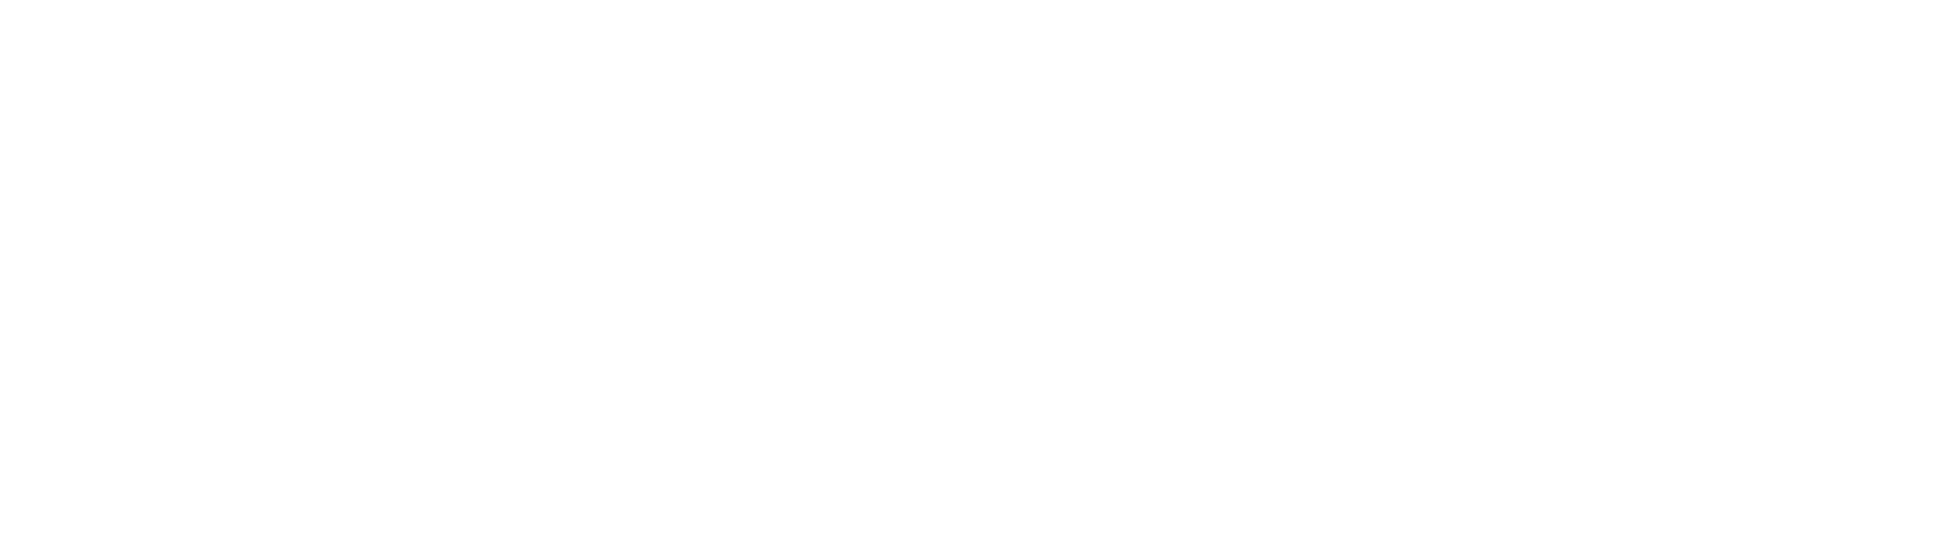 K9 Nannestad Dyreklinikk logo